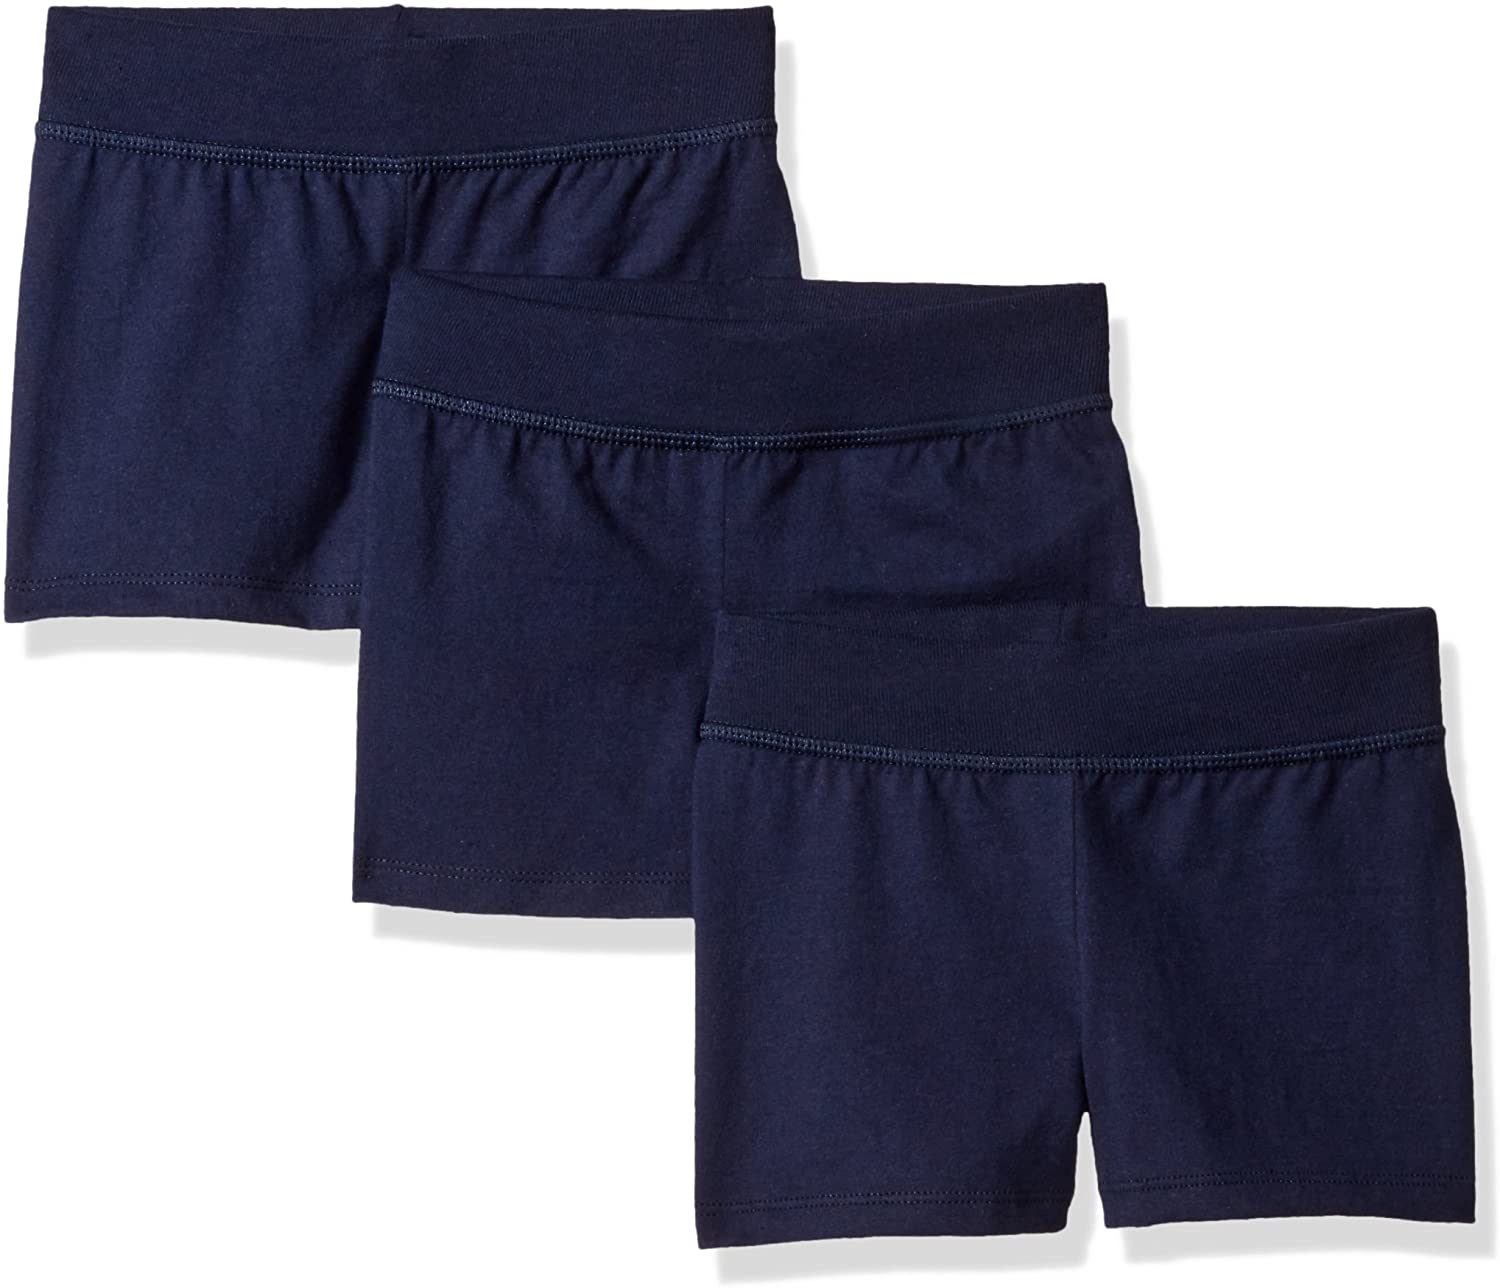 Hanes Little Girls' Jersey Short (Pack of 3) | eBay